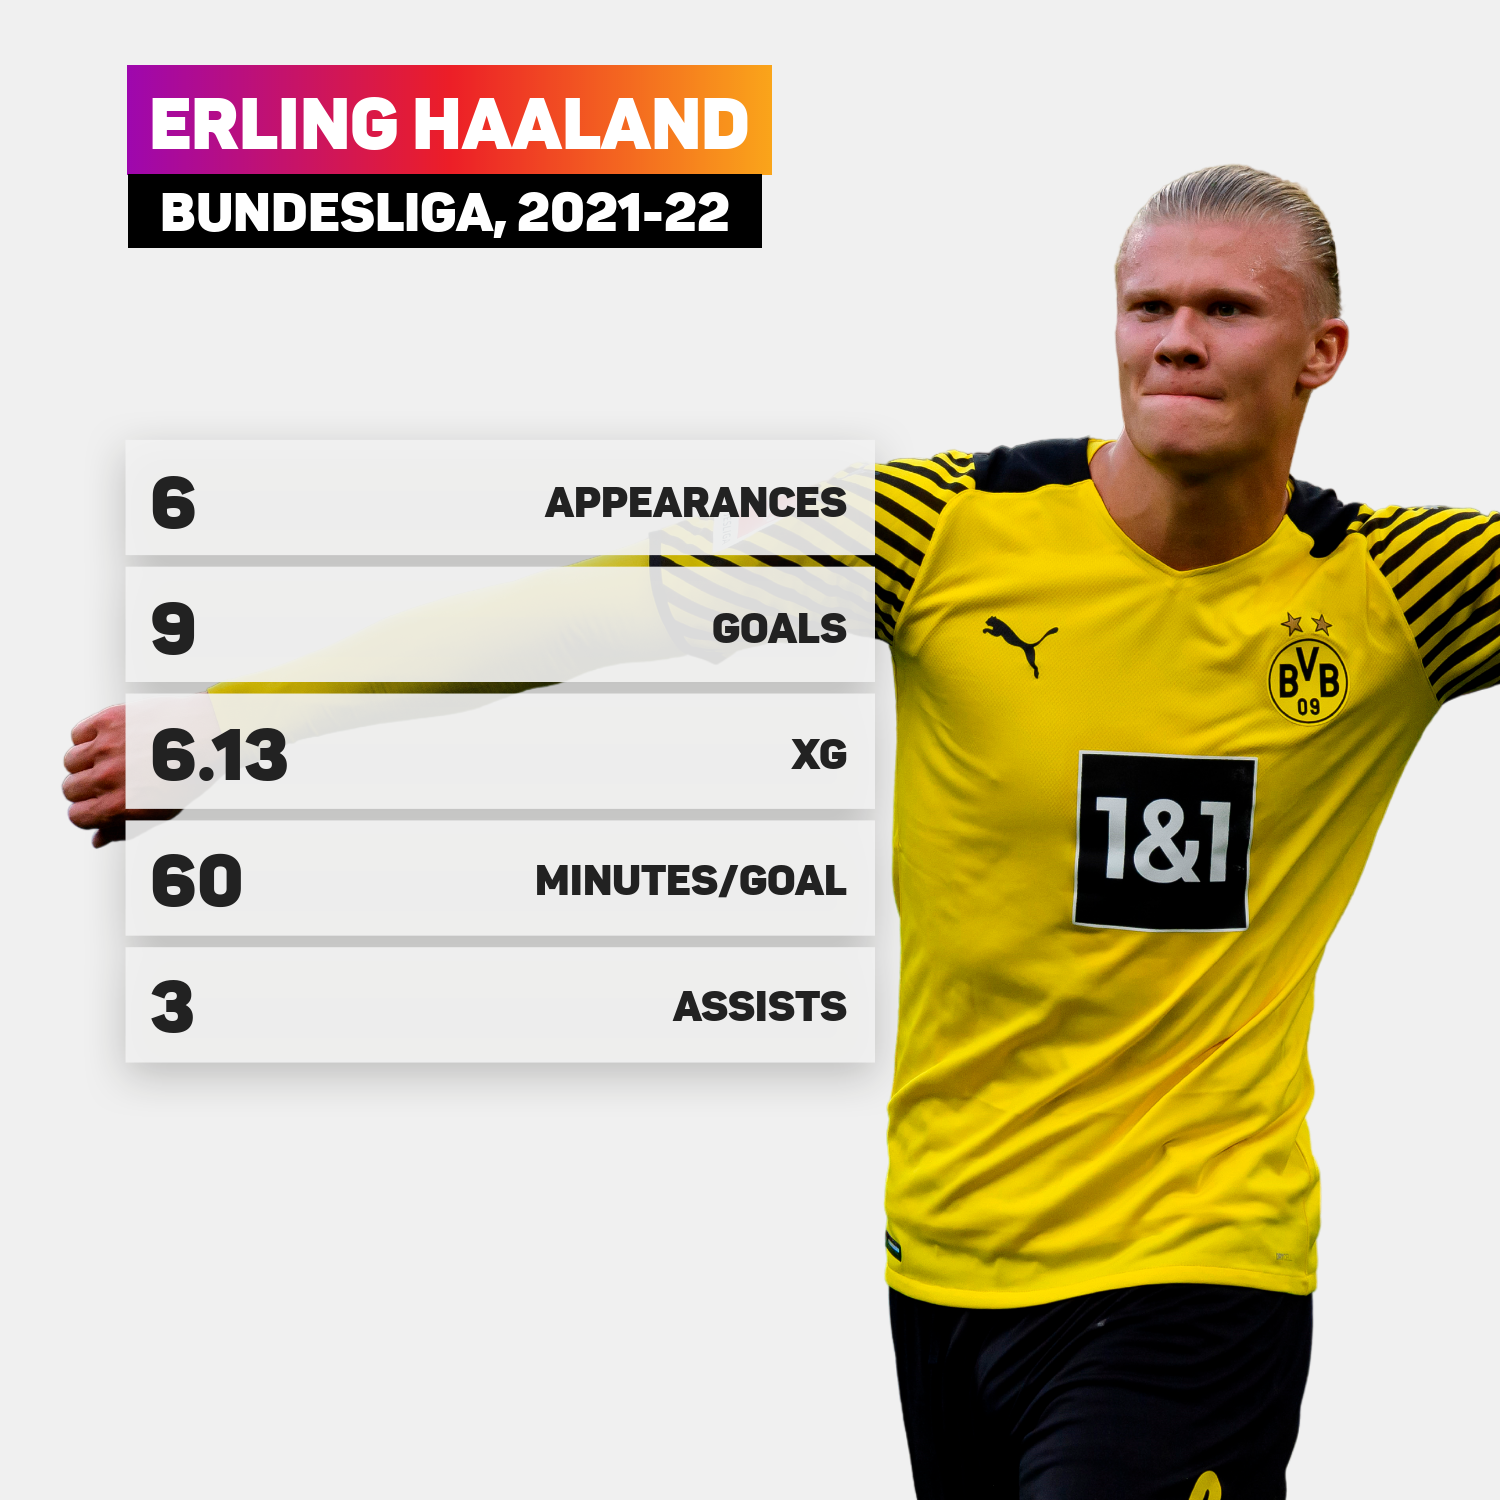 Erling Haaland is a goal machine